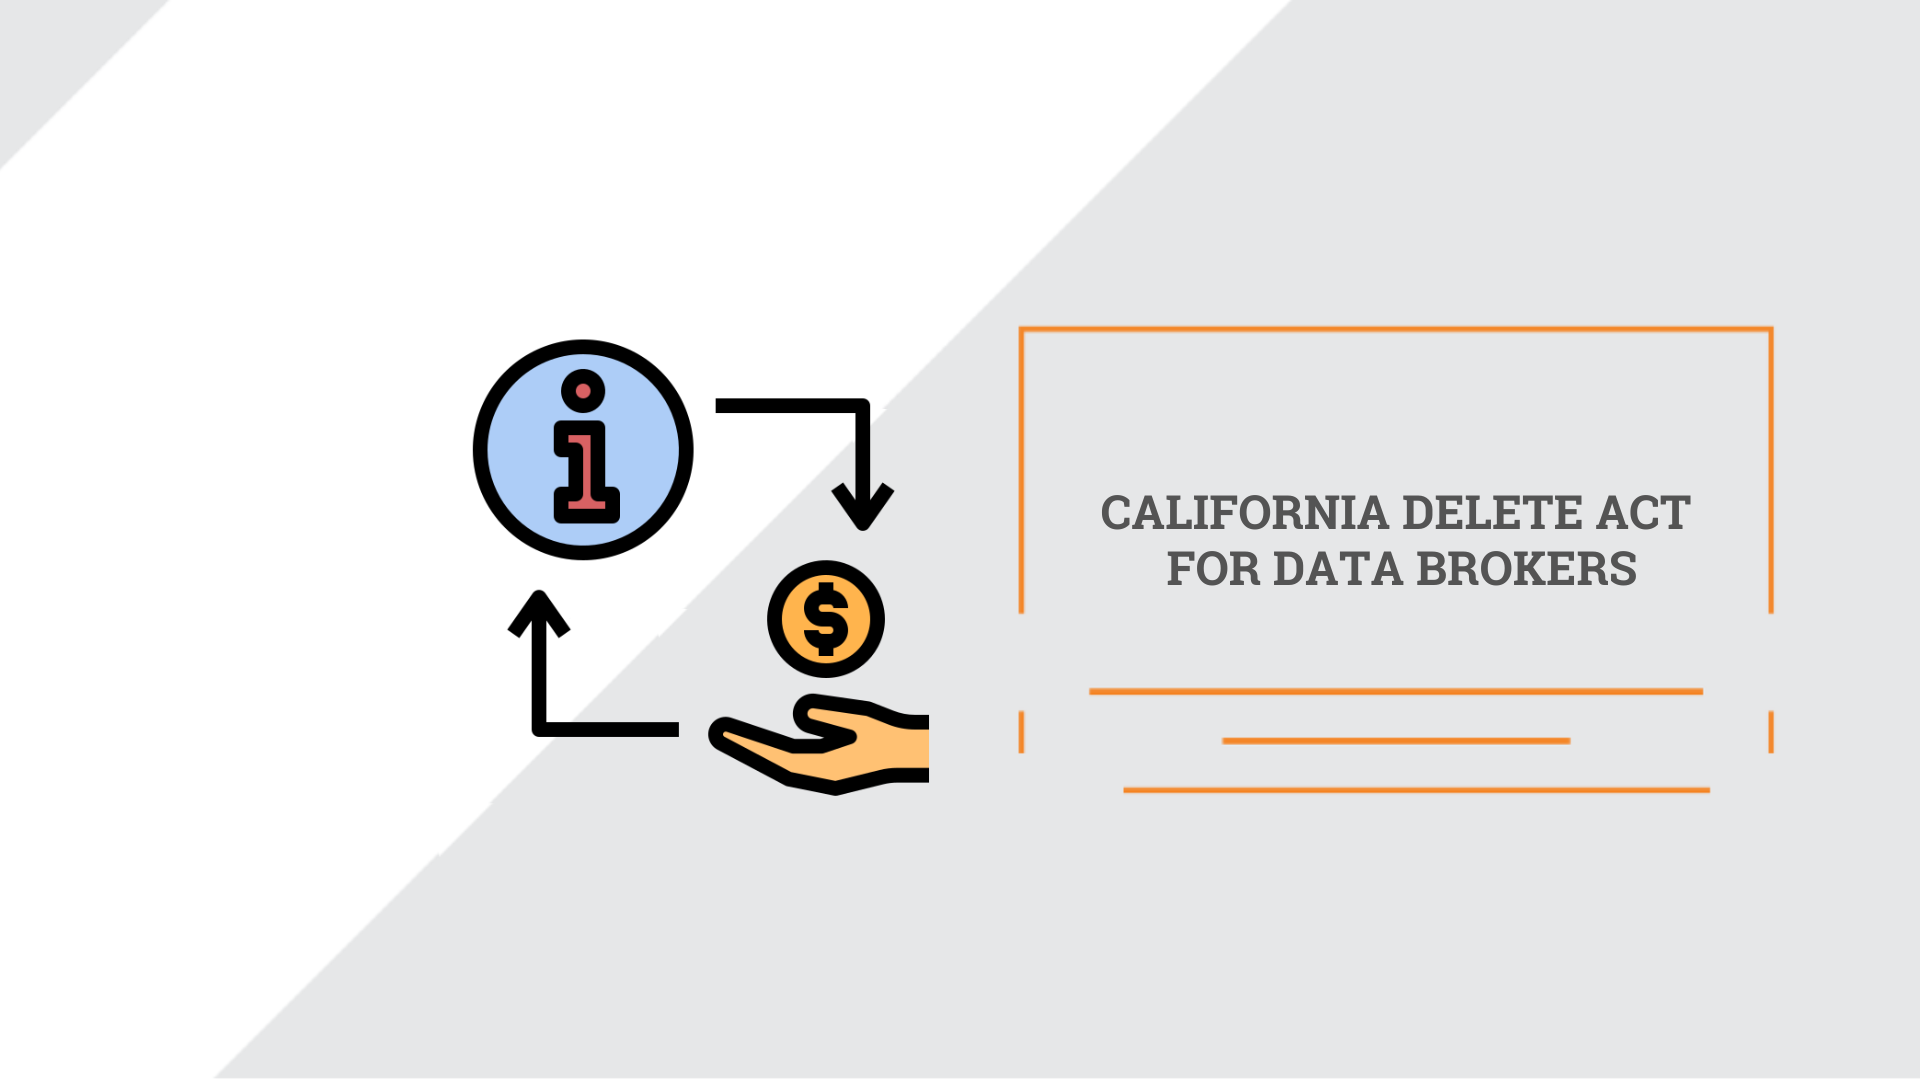 California DELETE Act for data brokers